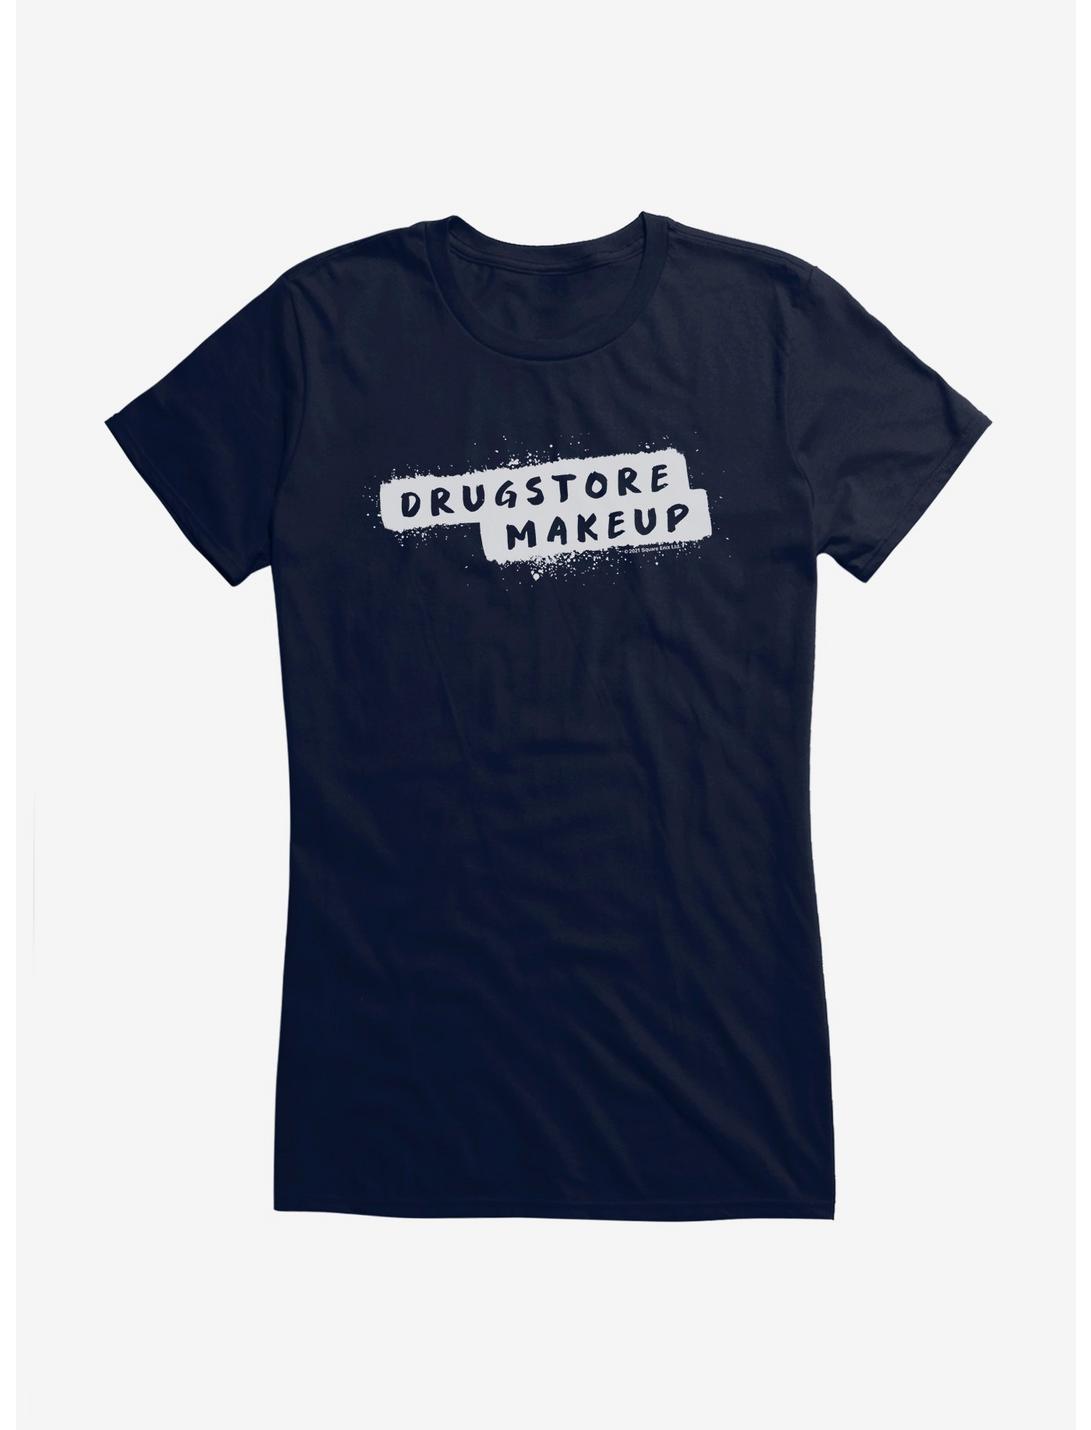 Square Enix Drugstore Makeup Girls T-Shirt, NAVY, hi-res